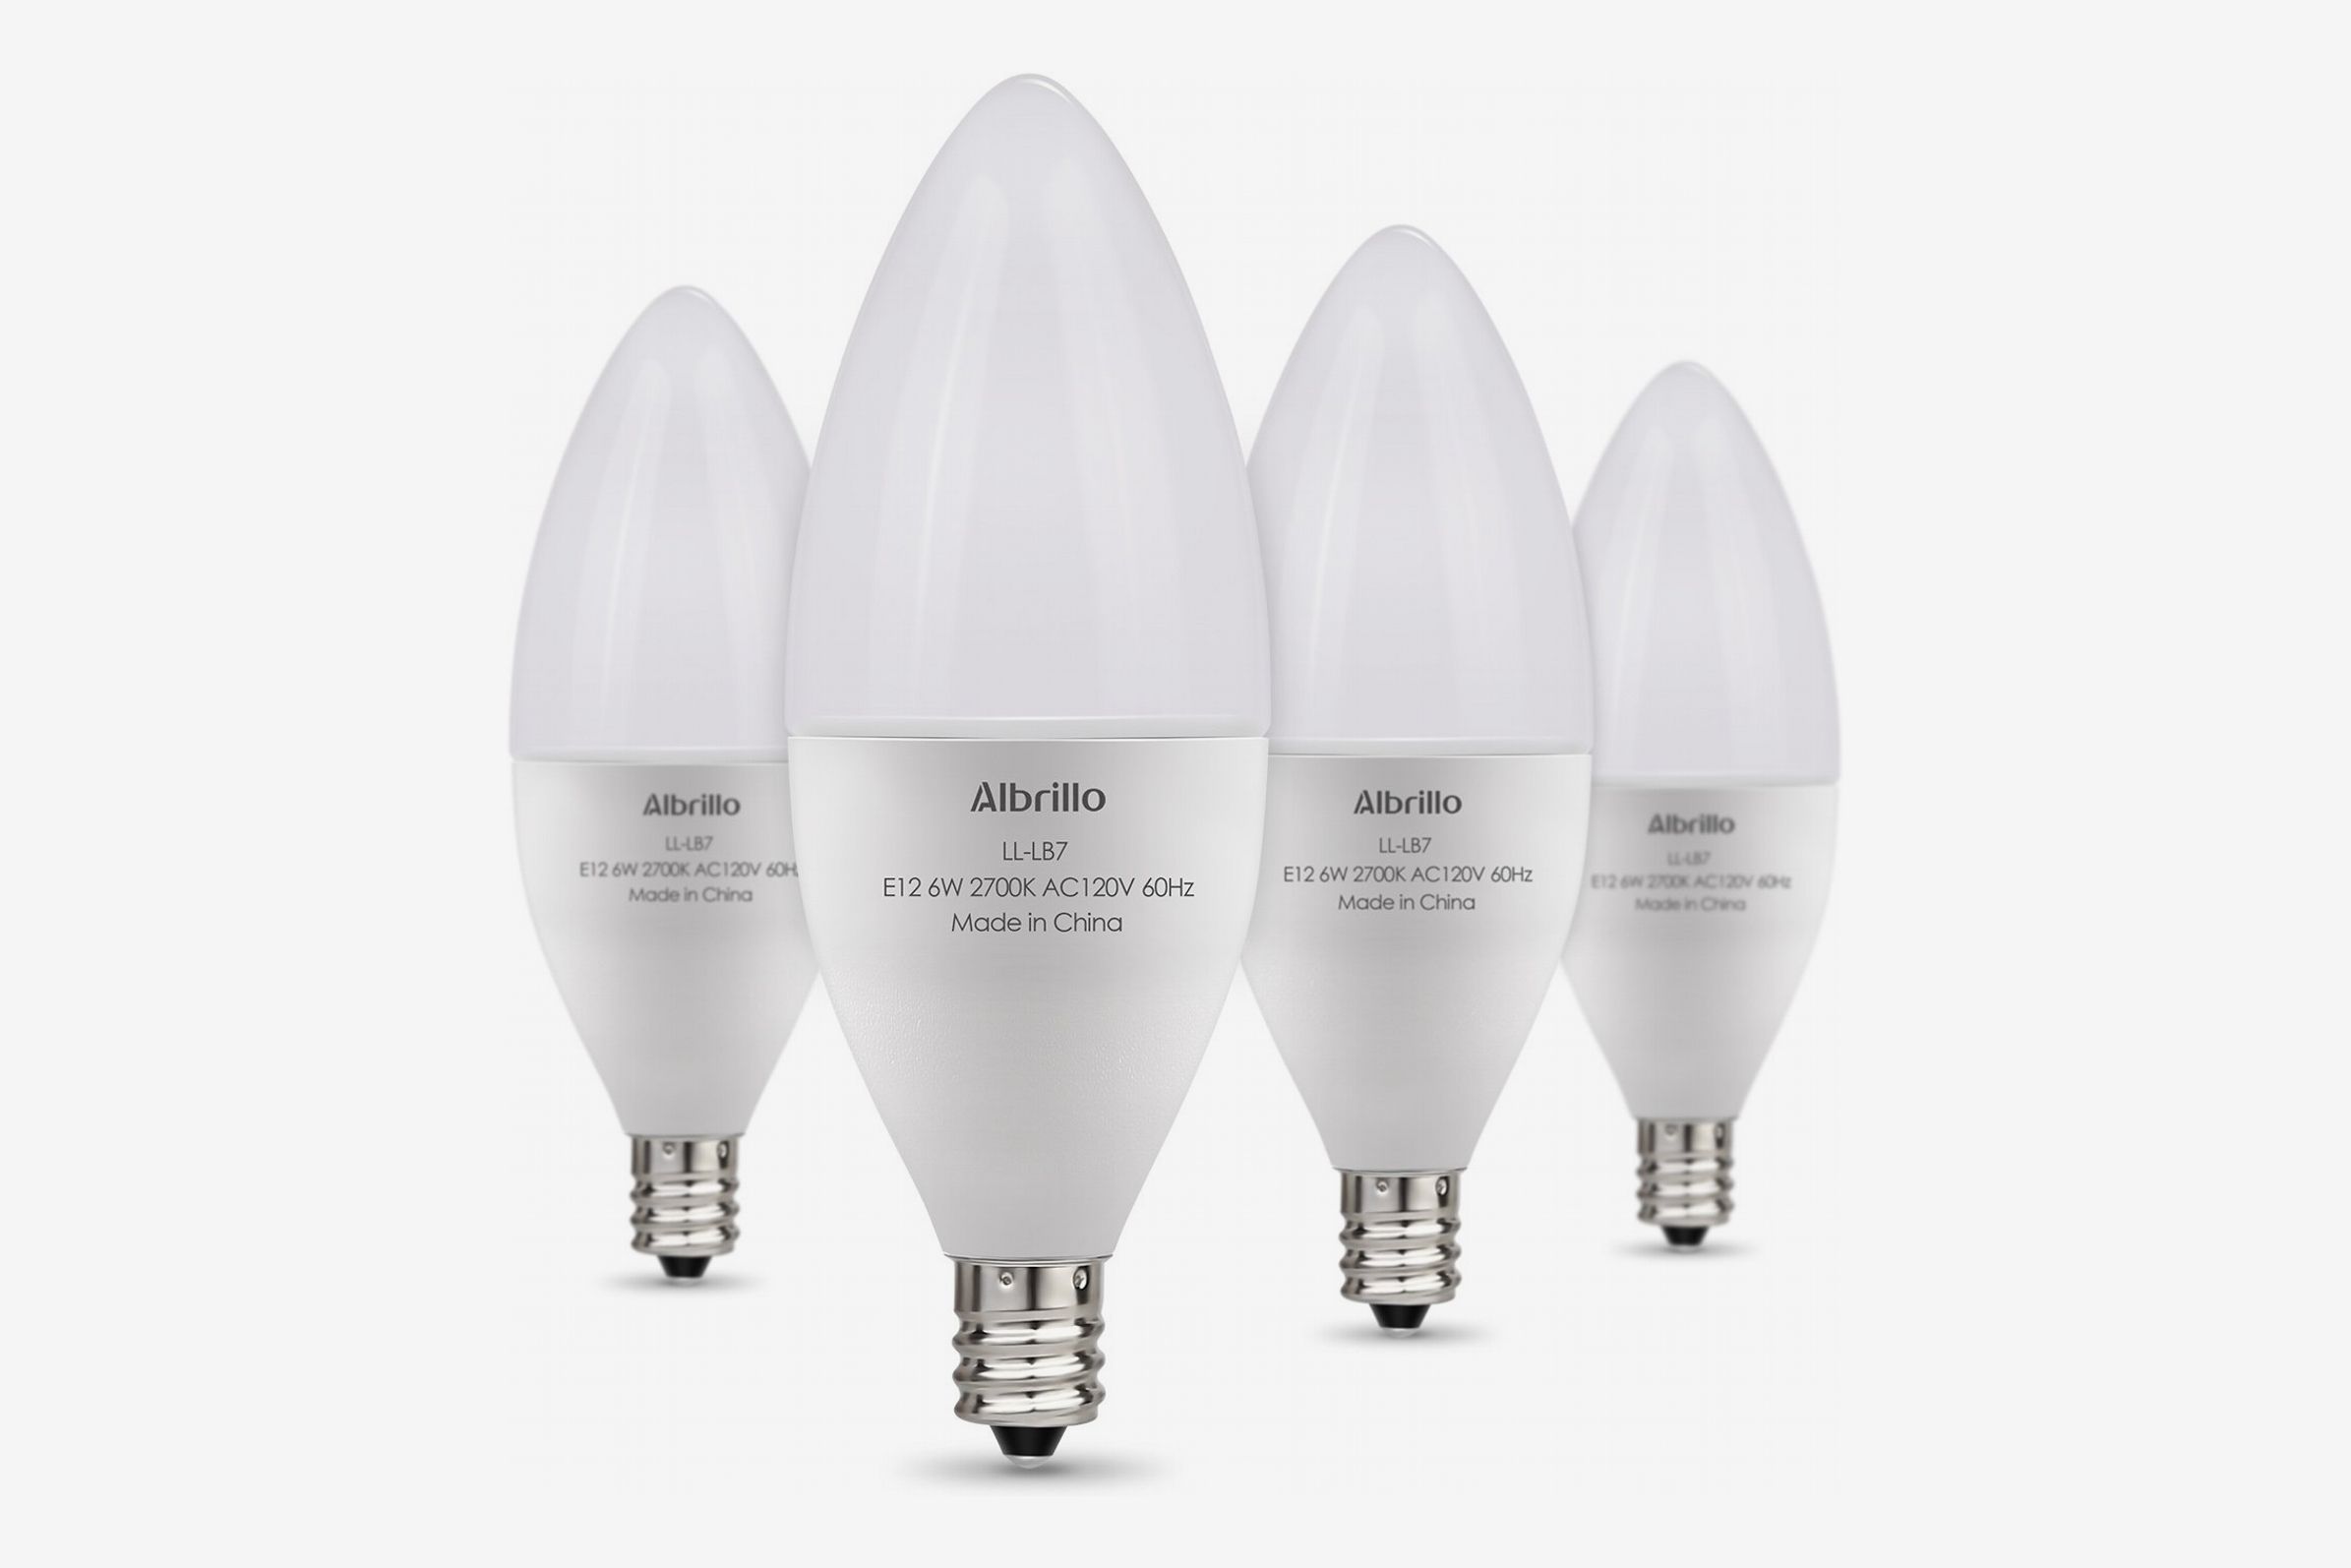 Halogen Bulbs Equivalent 75W Candelabra Base Bulb,T3/T4 Candelabra Screw Base Corn Bulb Pack of 2 Warm White 3000K All-New E12 LED Candelabra Light Bulbs,Dimmable,Energy-Saving Bulb Replacement 